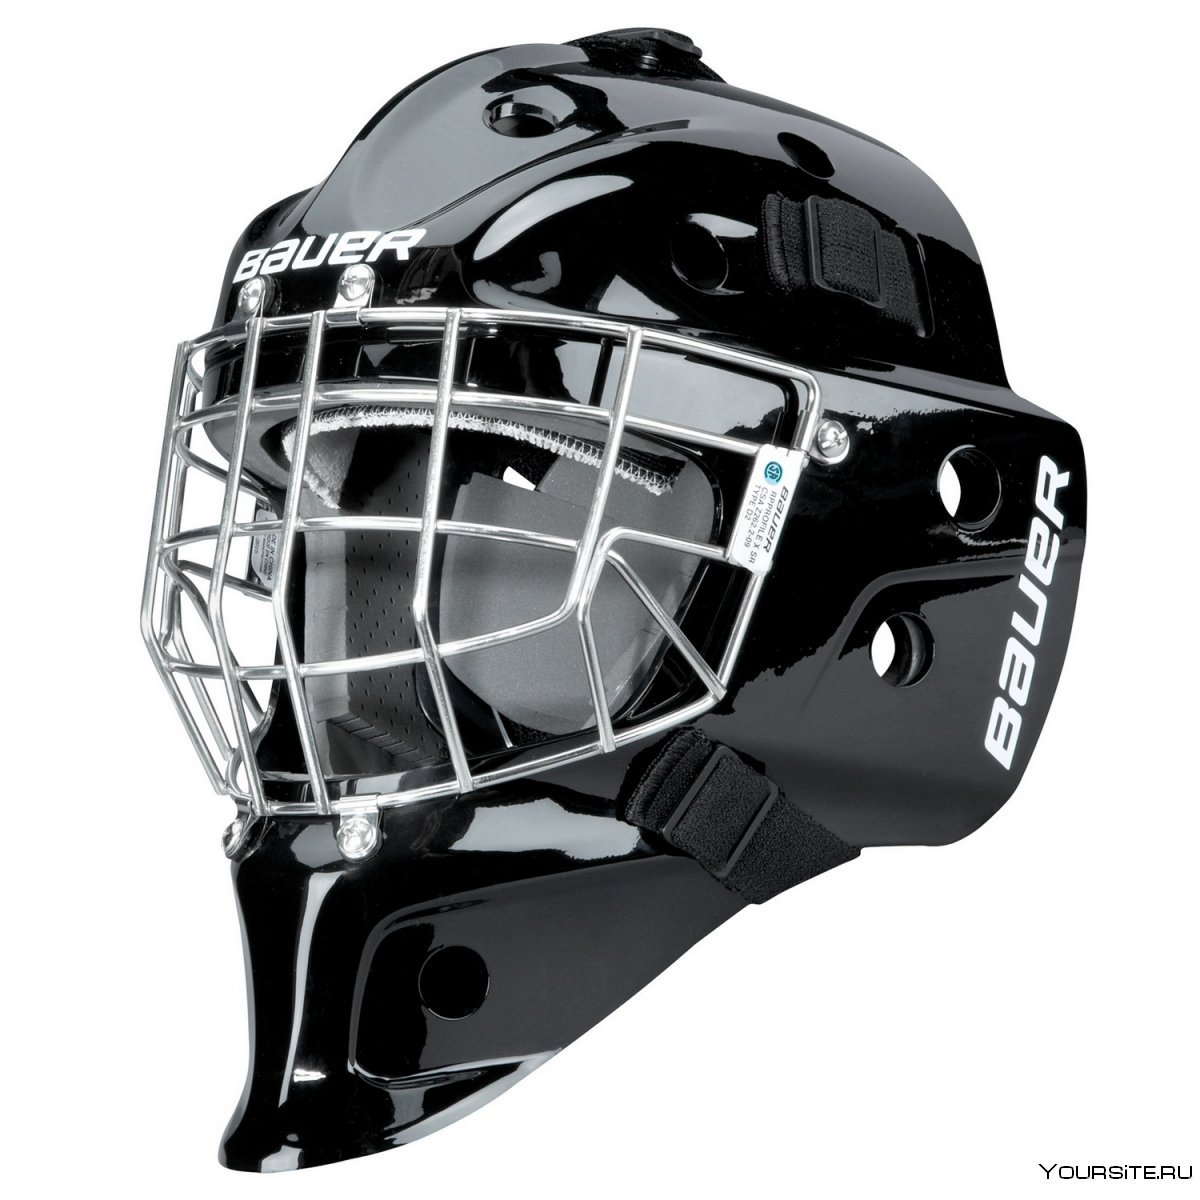 Bauer 940x Goalie Mask